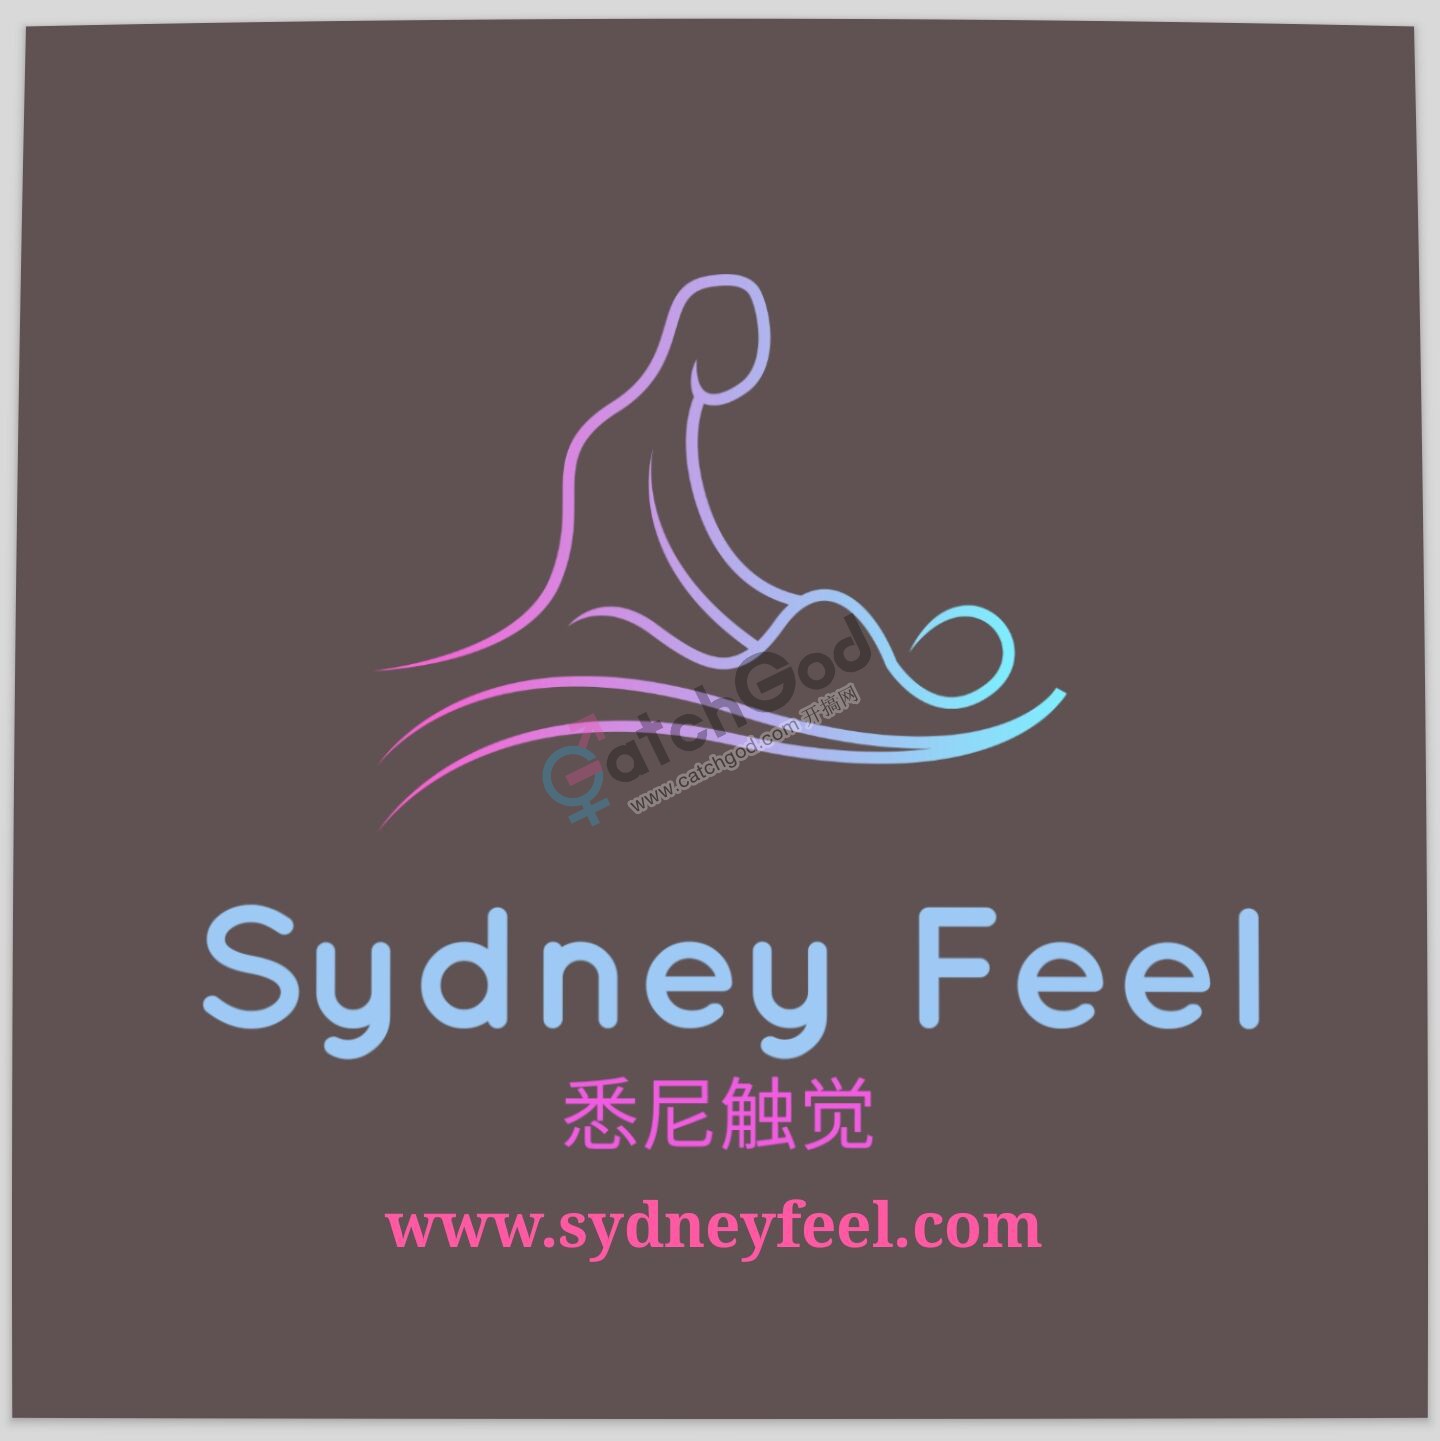 sydney feel logo.jpg